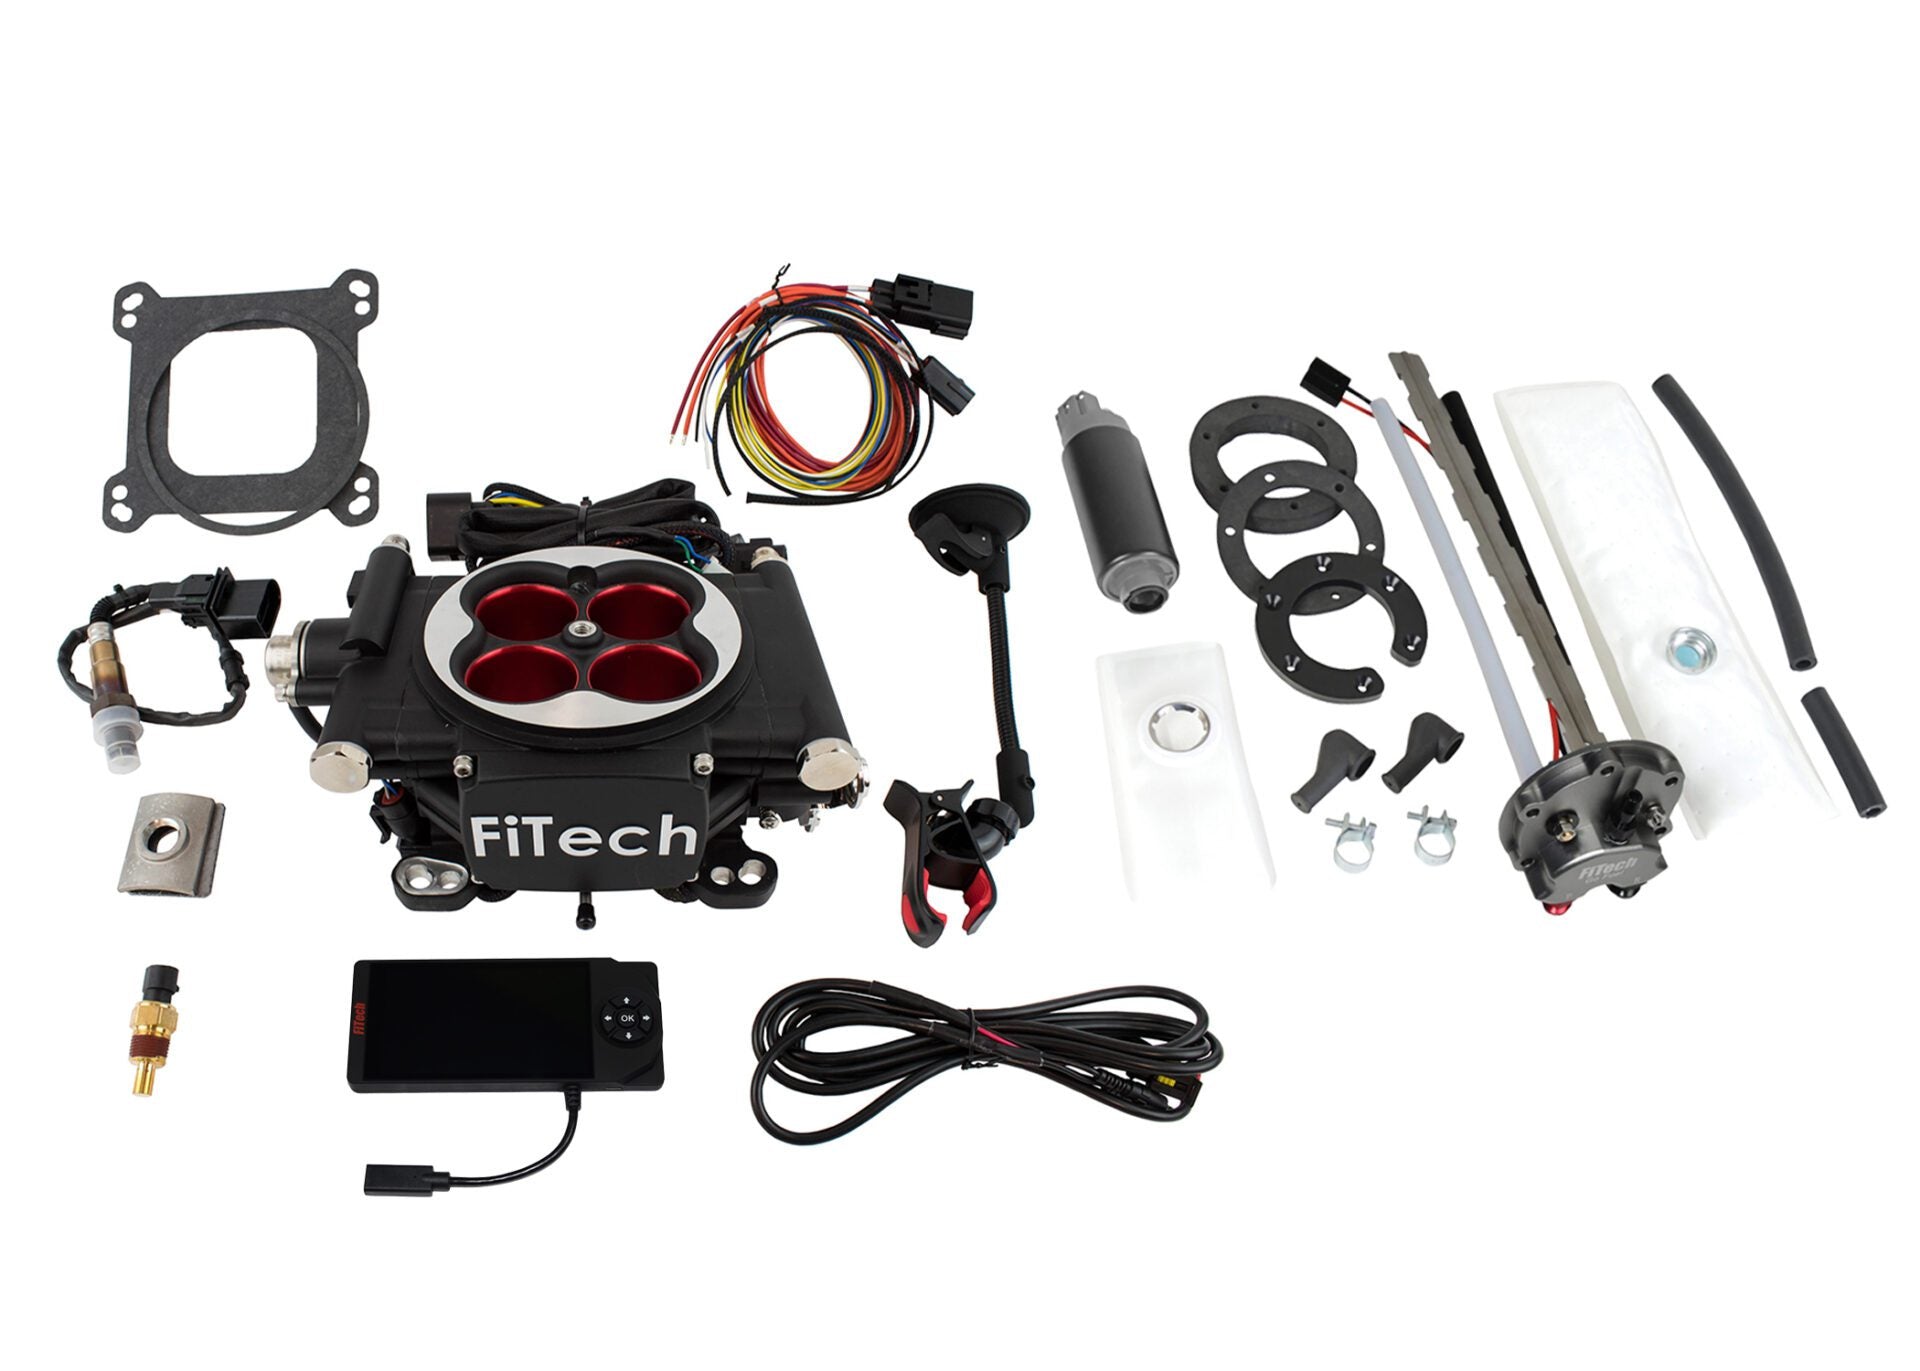 FiTech 36204 Go EFI 4-600 HP EFI System Power Adder - Matte Black, In Tank Retrofit Kit 50015